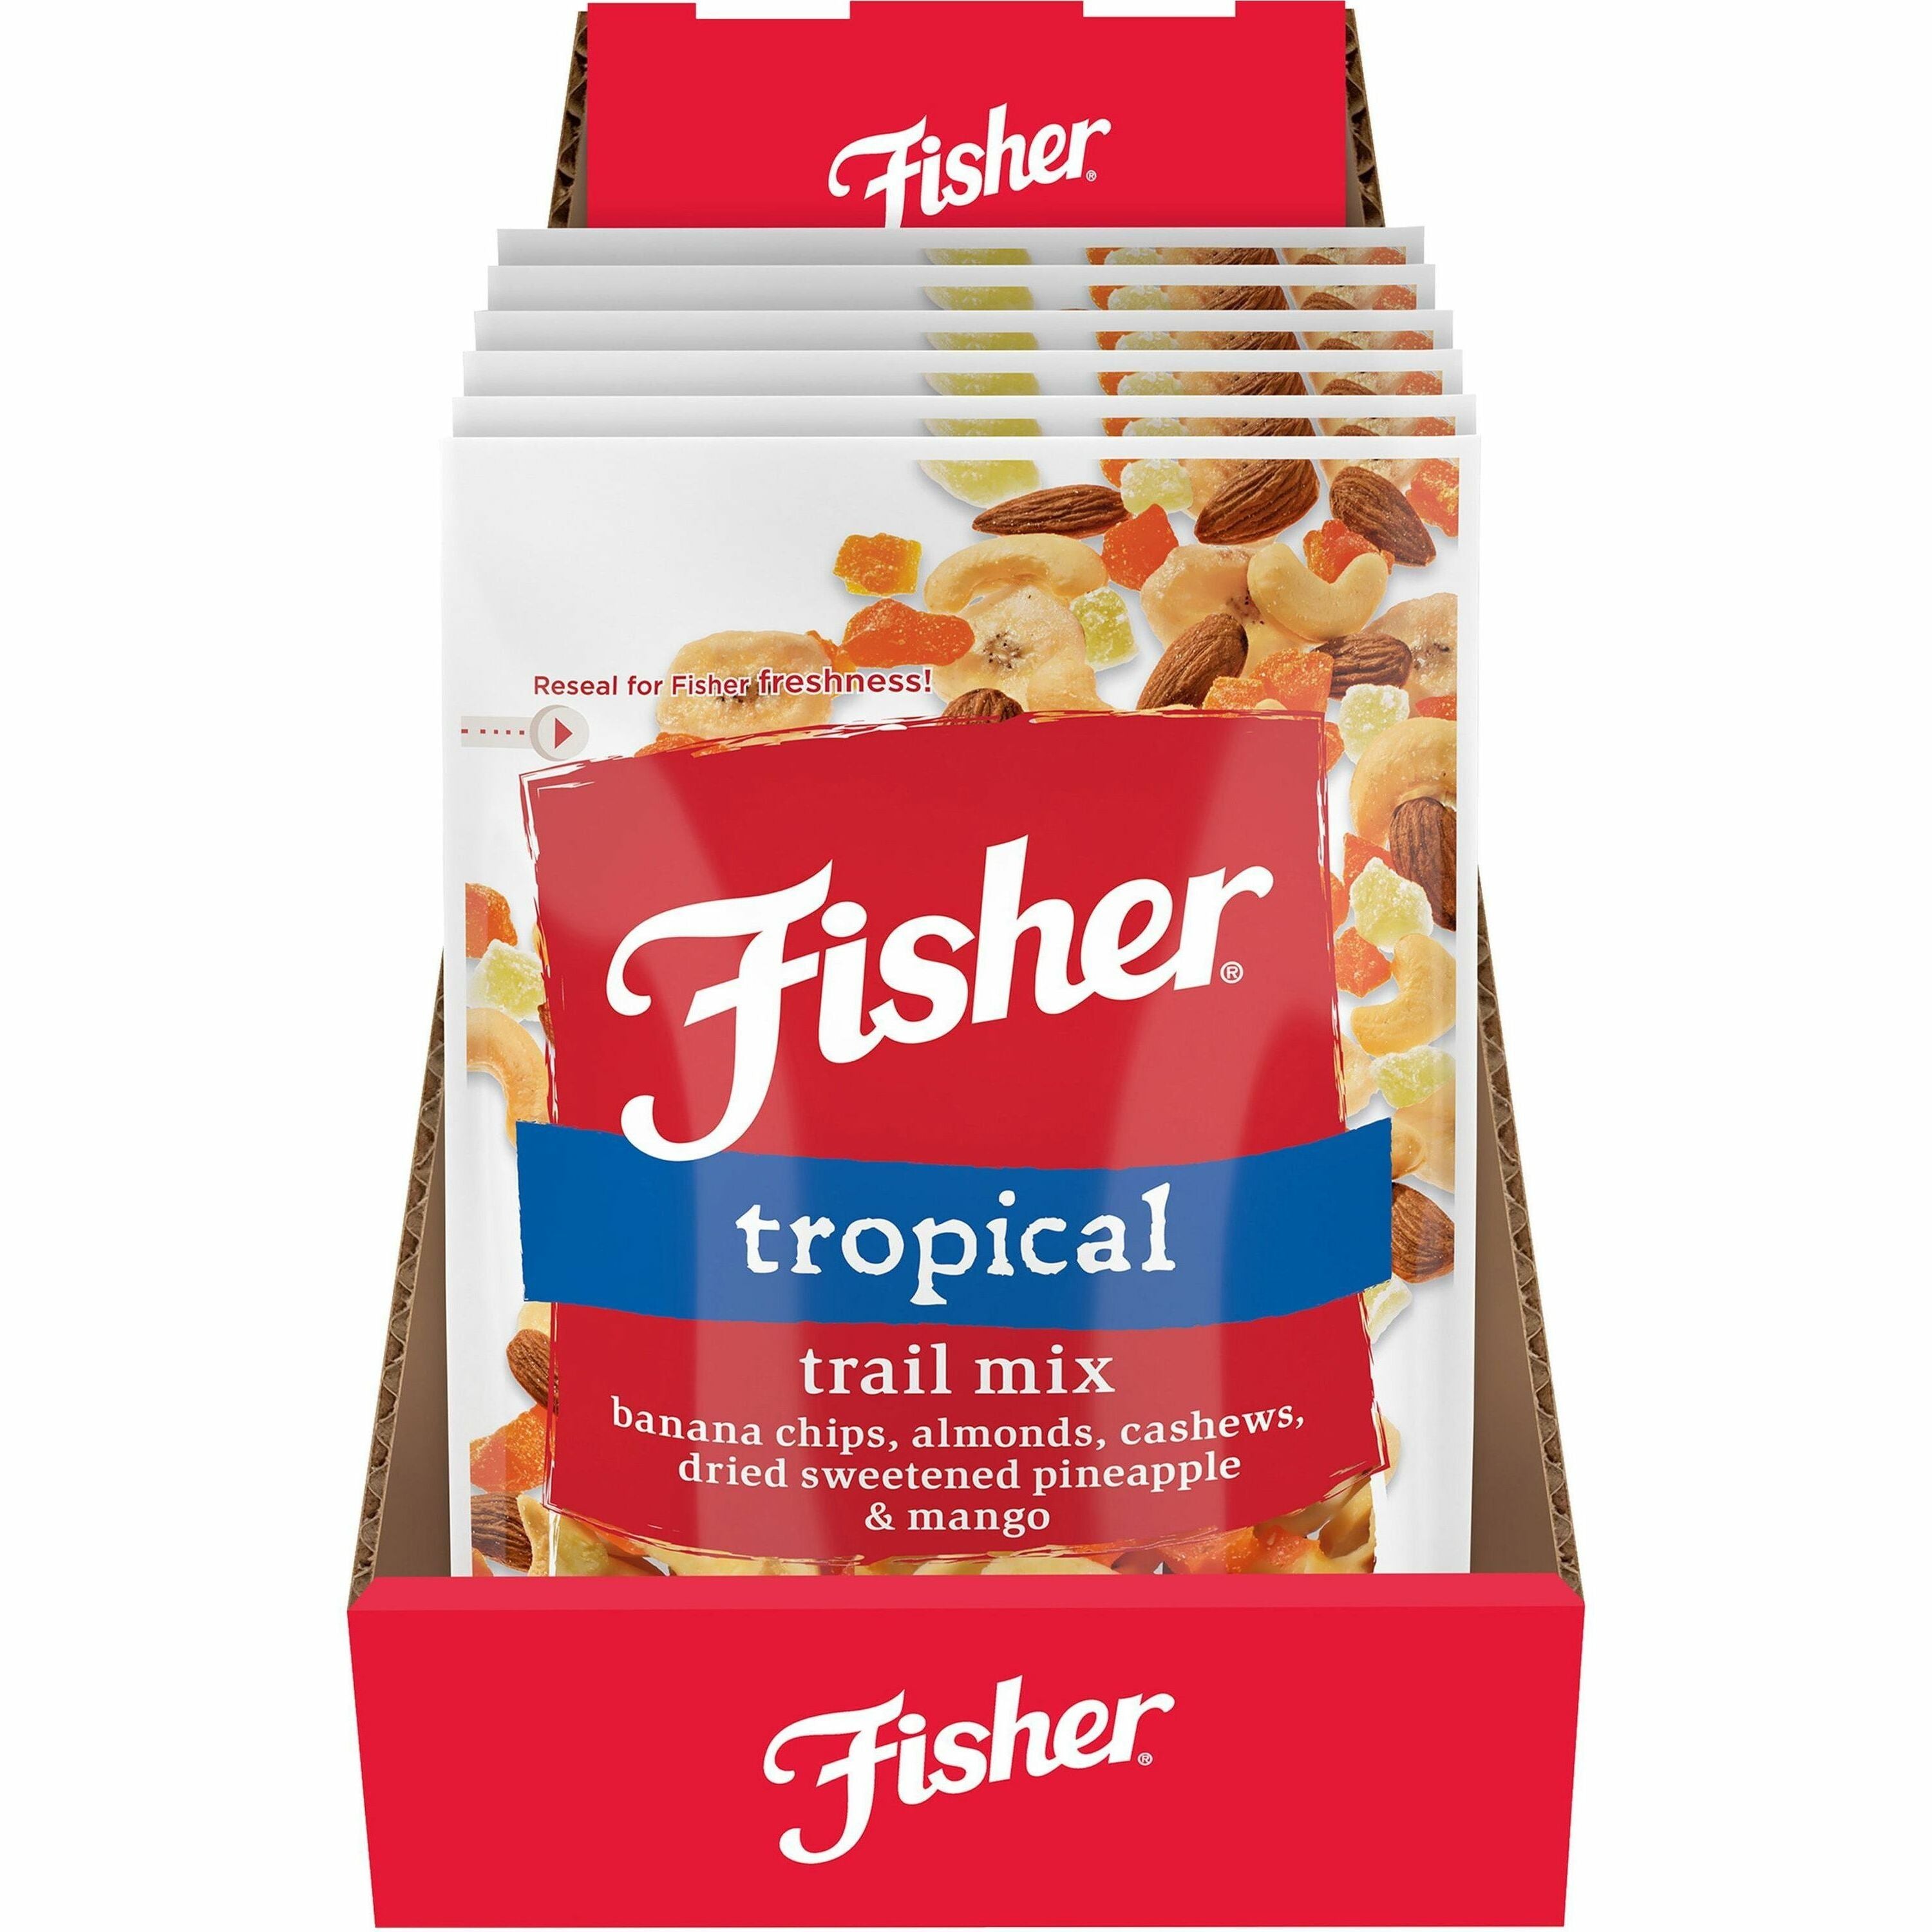 fisher-tropical-trail-mix-no-artificial-color-resealable-bag-banana-almond-cashew-pineapple-mango-1-serving-bag-350-oz-6-carton_jbsp27165 - 1